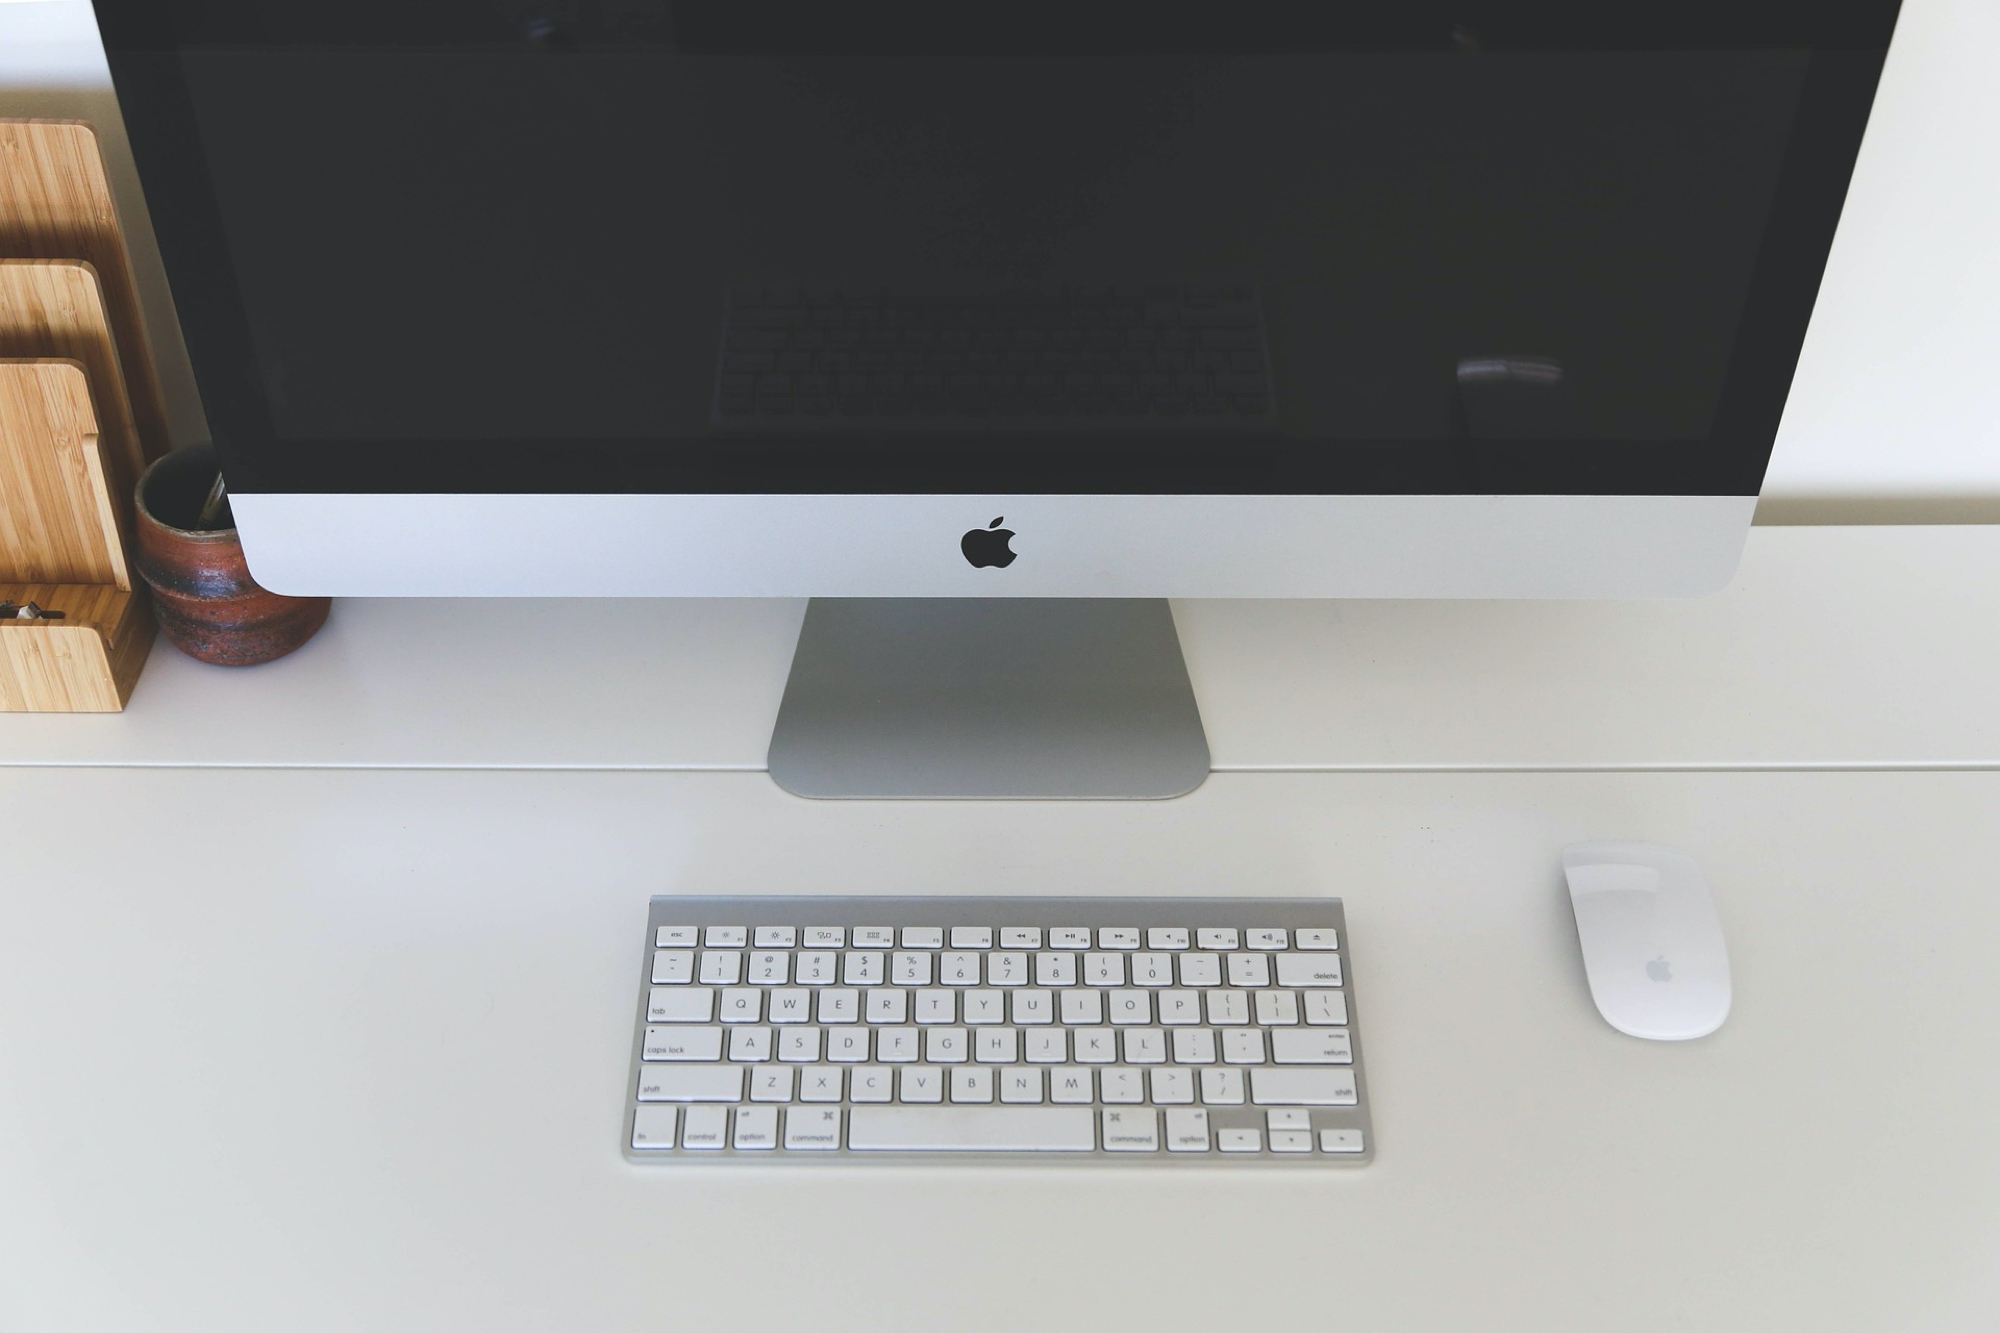 iMac keyboard - Reminders keyboard shortcuts